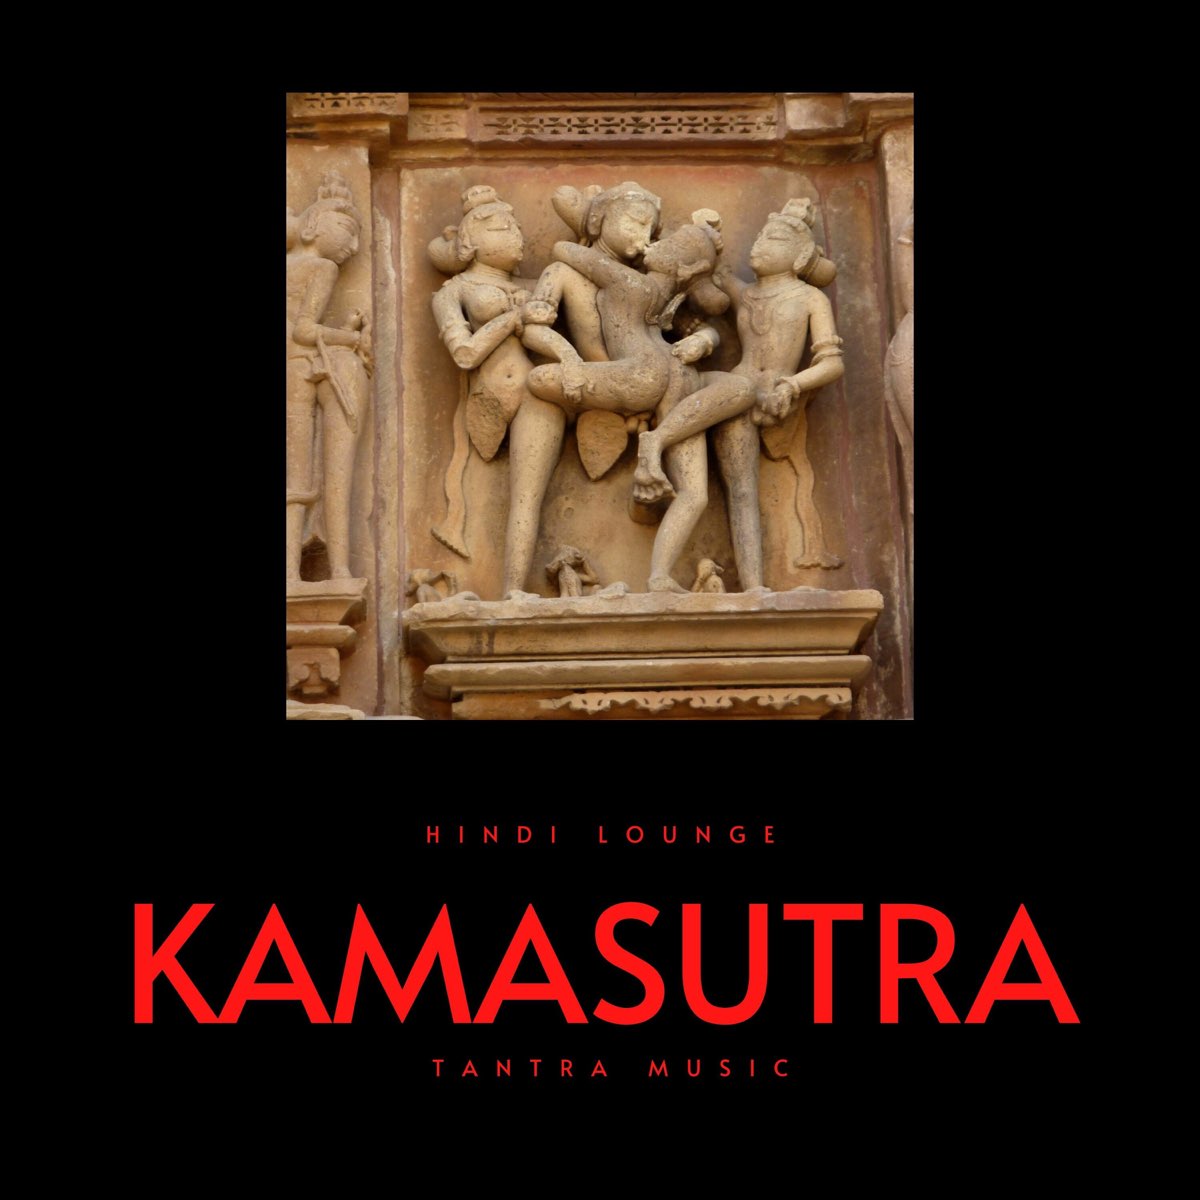 Kamasutra, Tantra Music - Album by Hindi Lounge - Apple Music